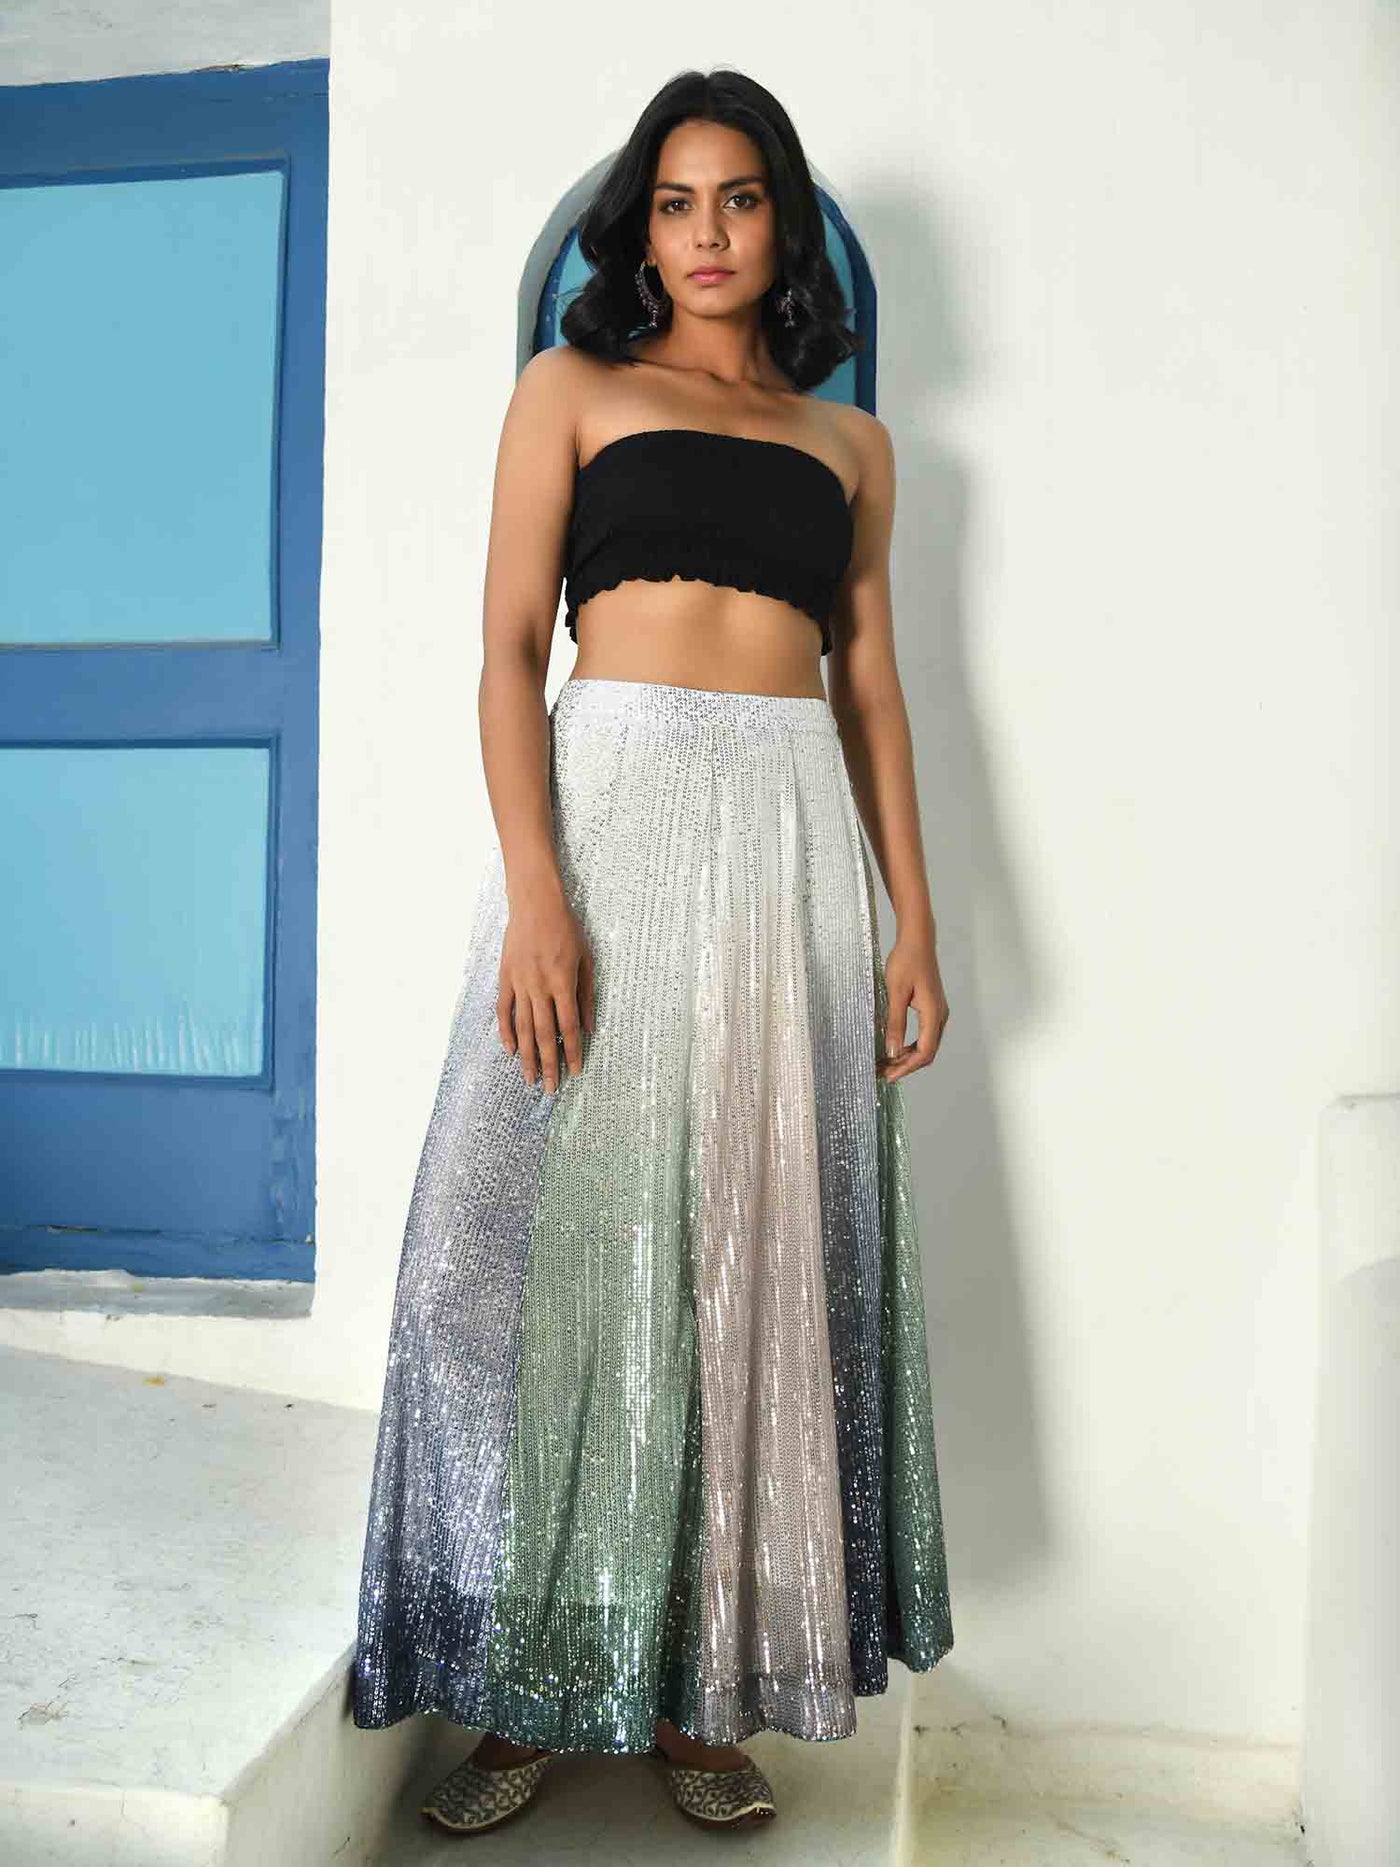 The vibrant & vivacious skirt